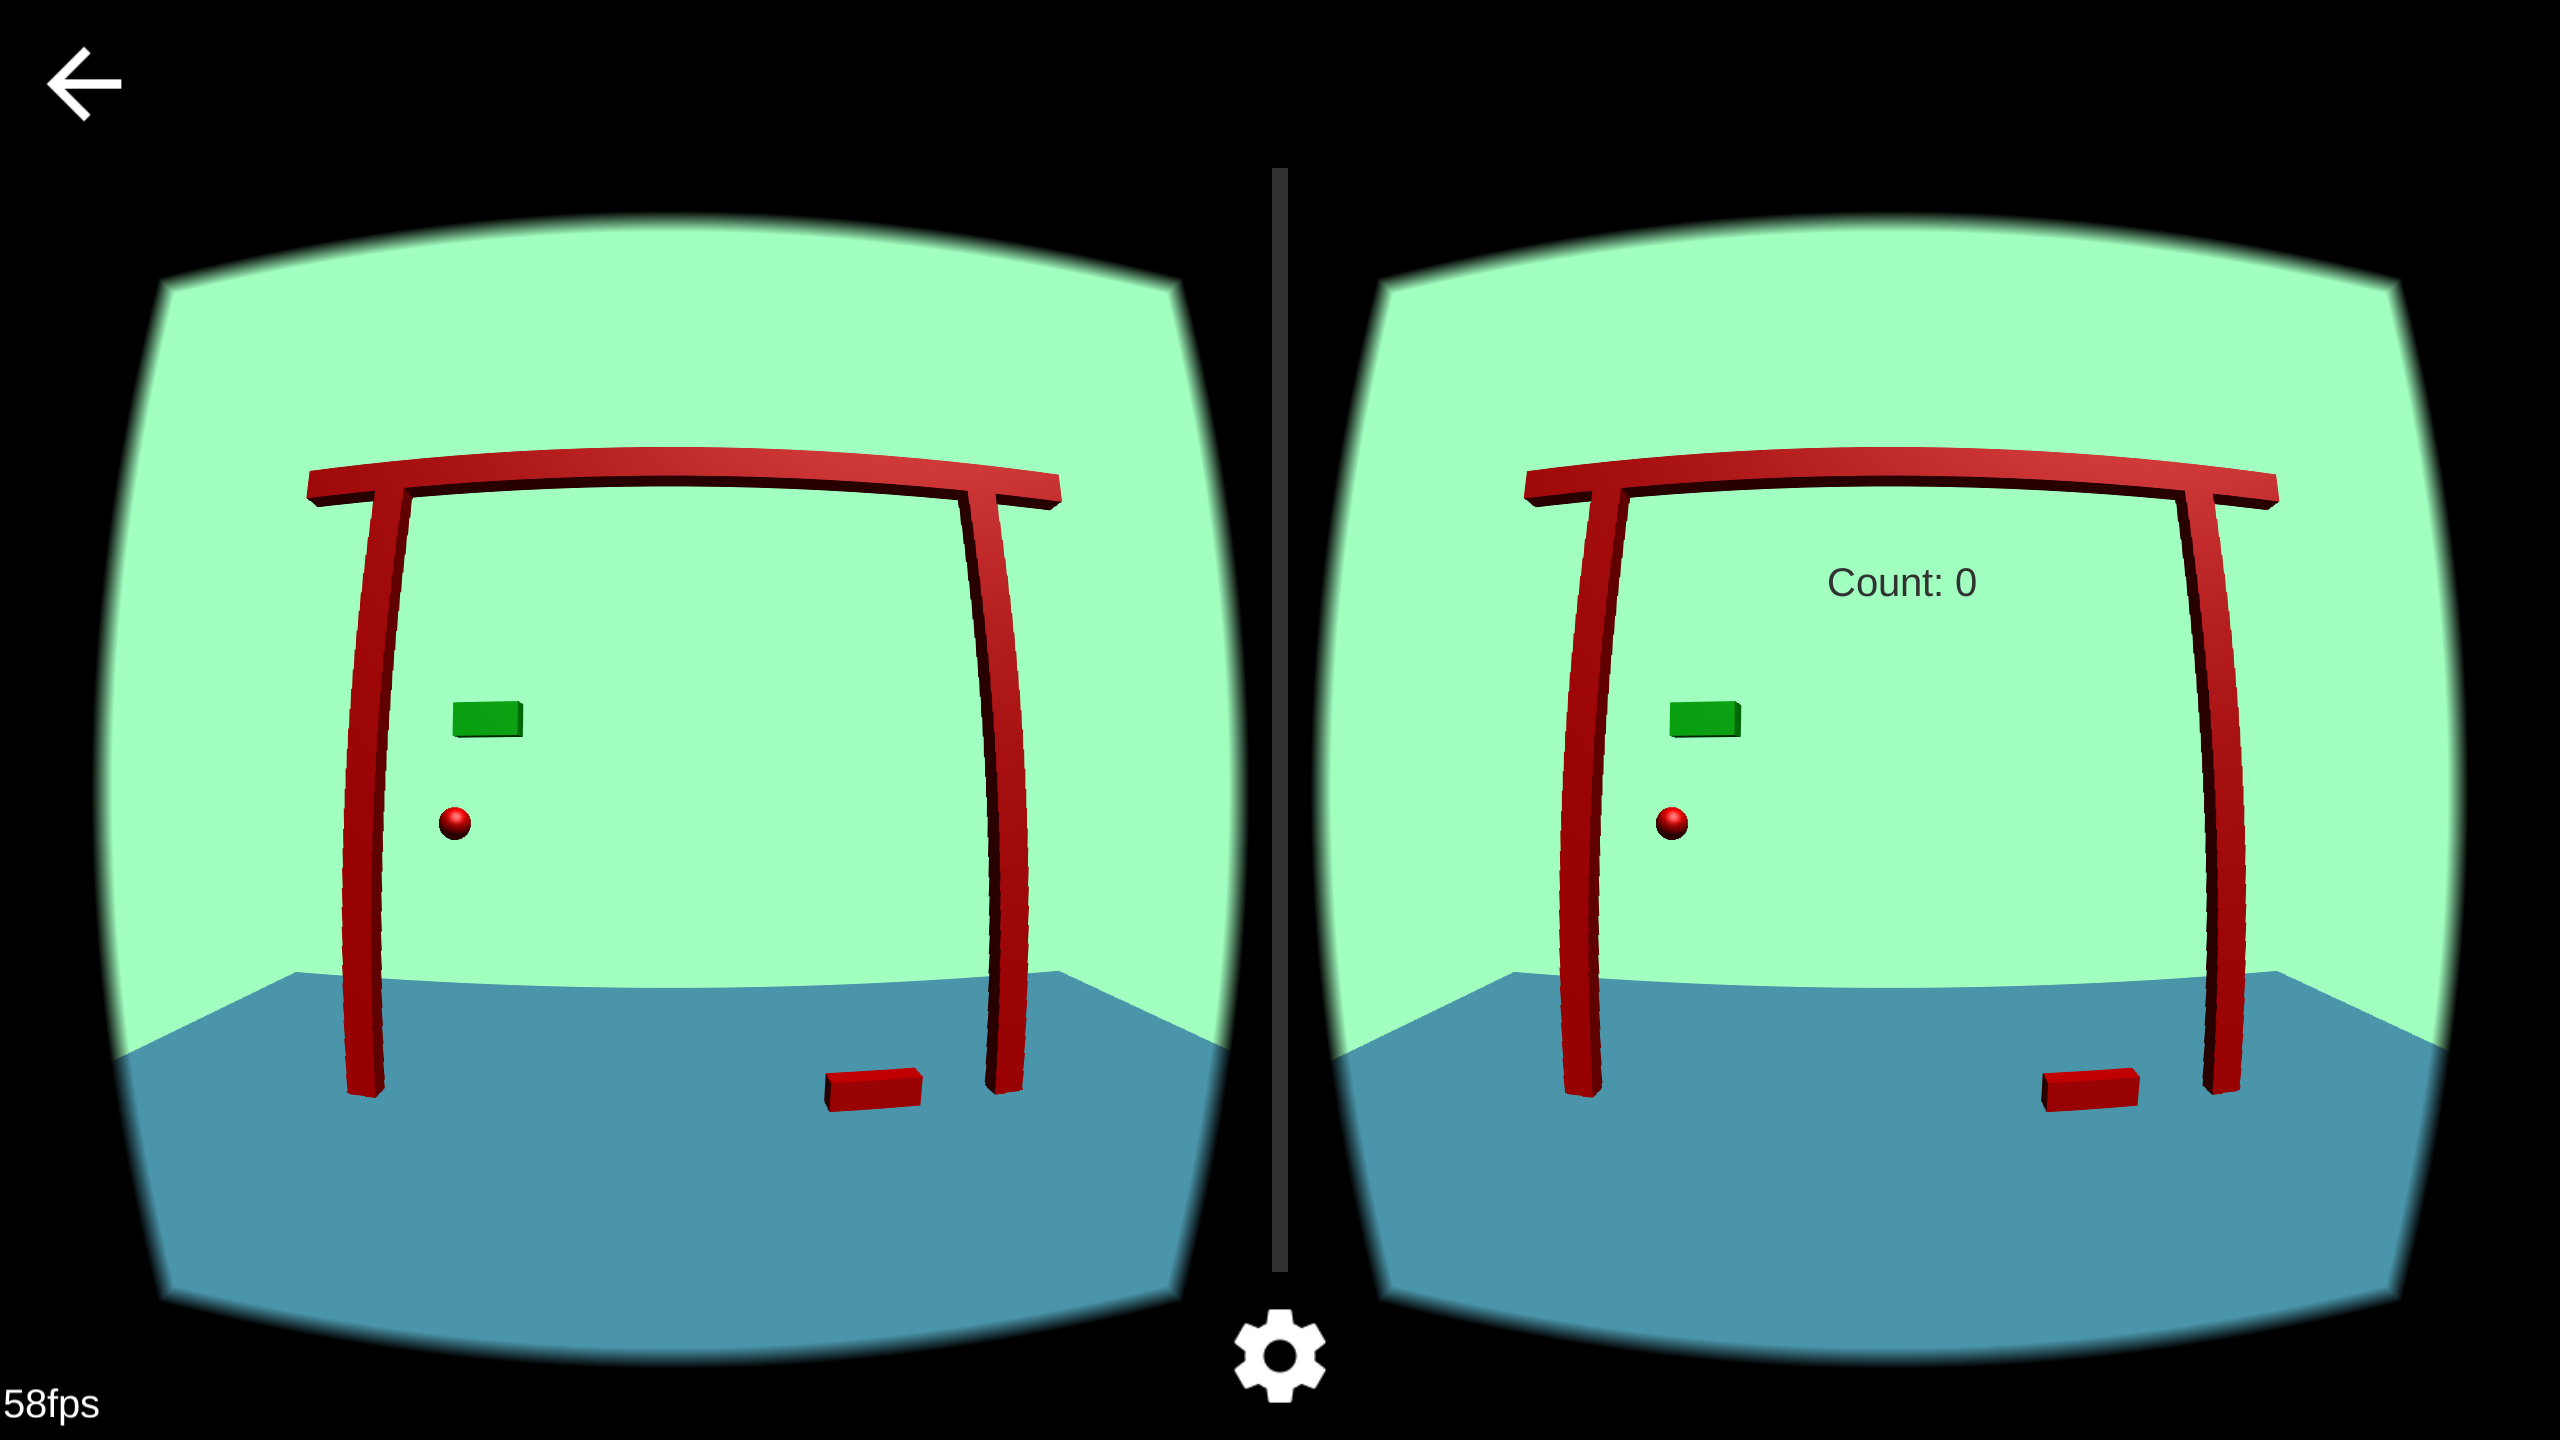 Breakout game for Cardboard VR